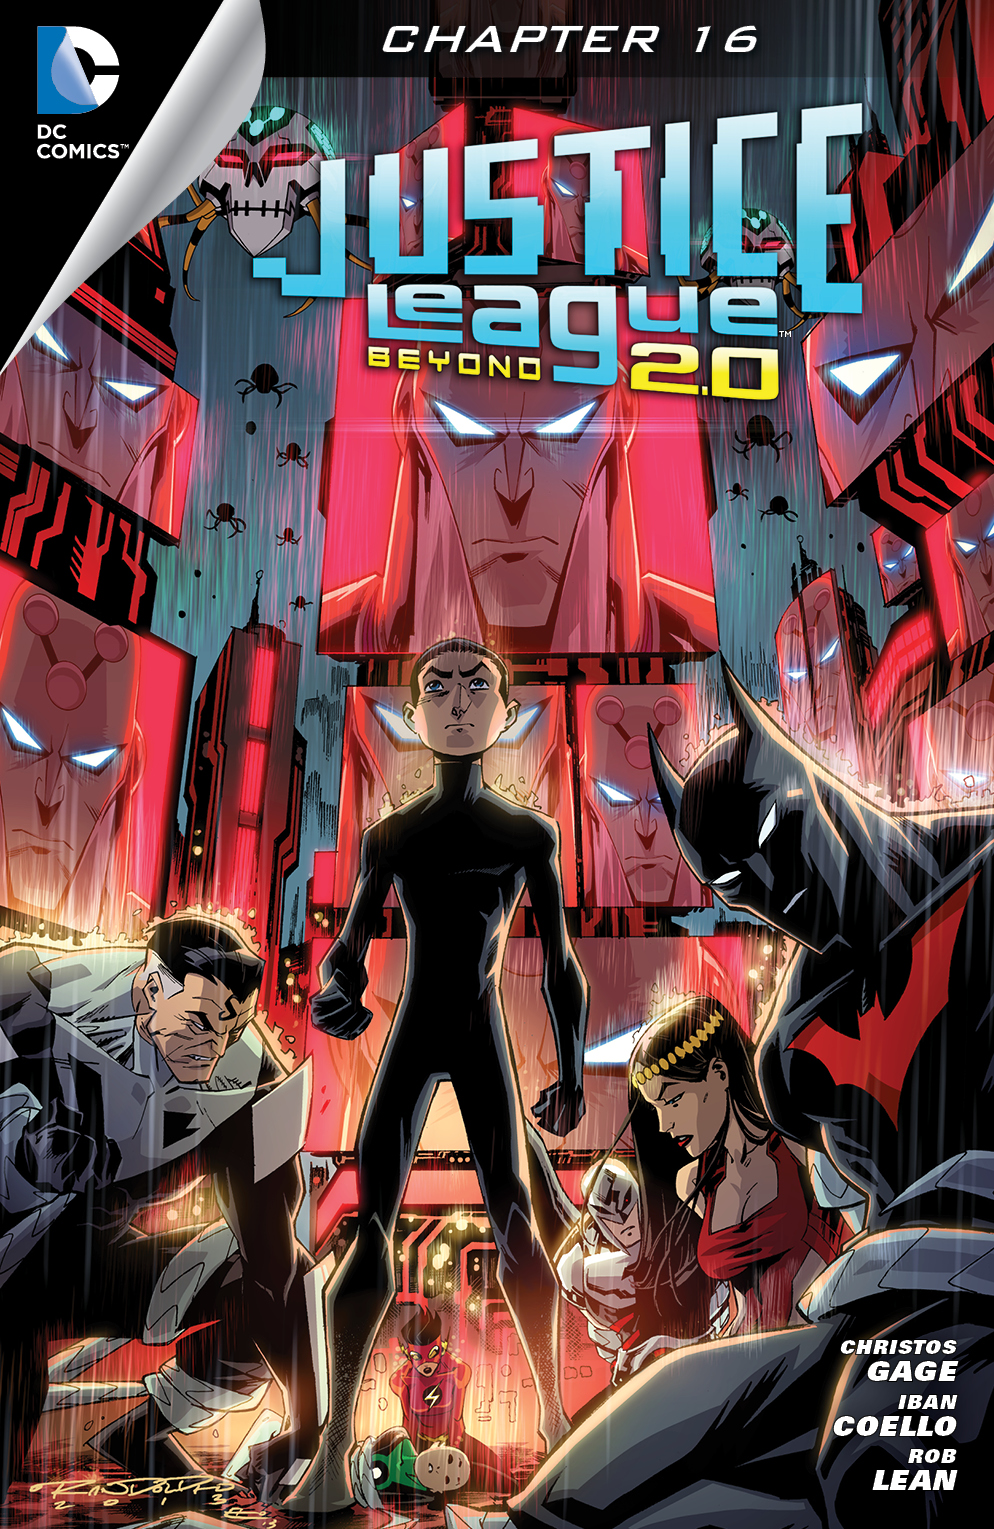 Justice League Beyond 2.0 #16 preview images